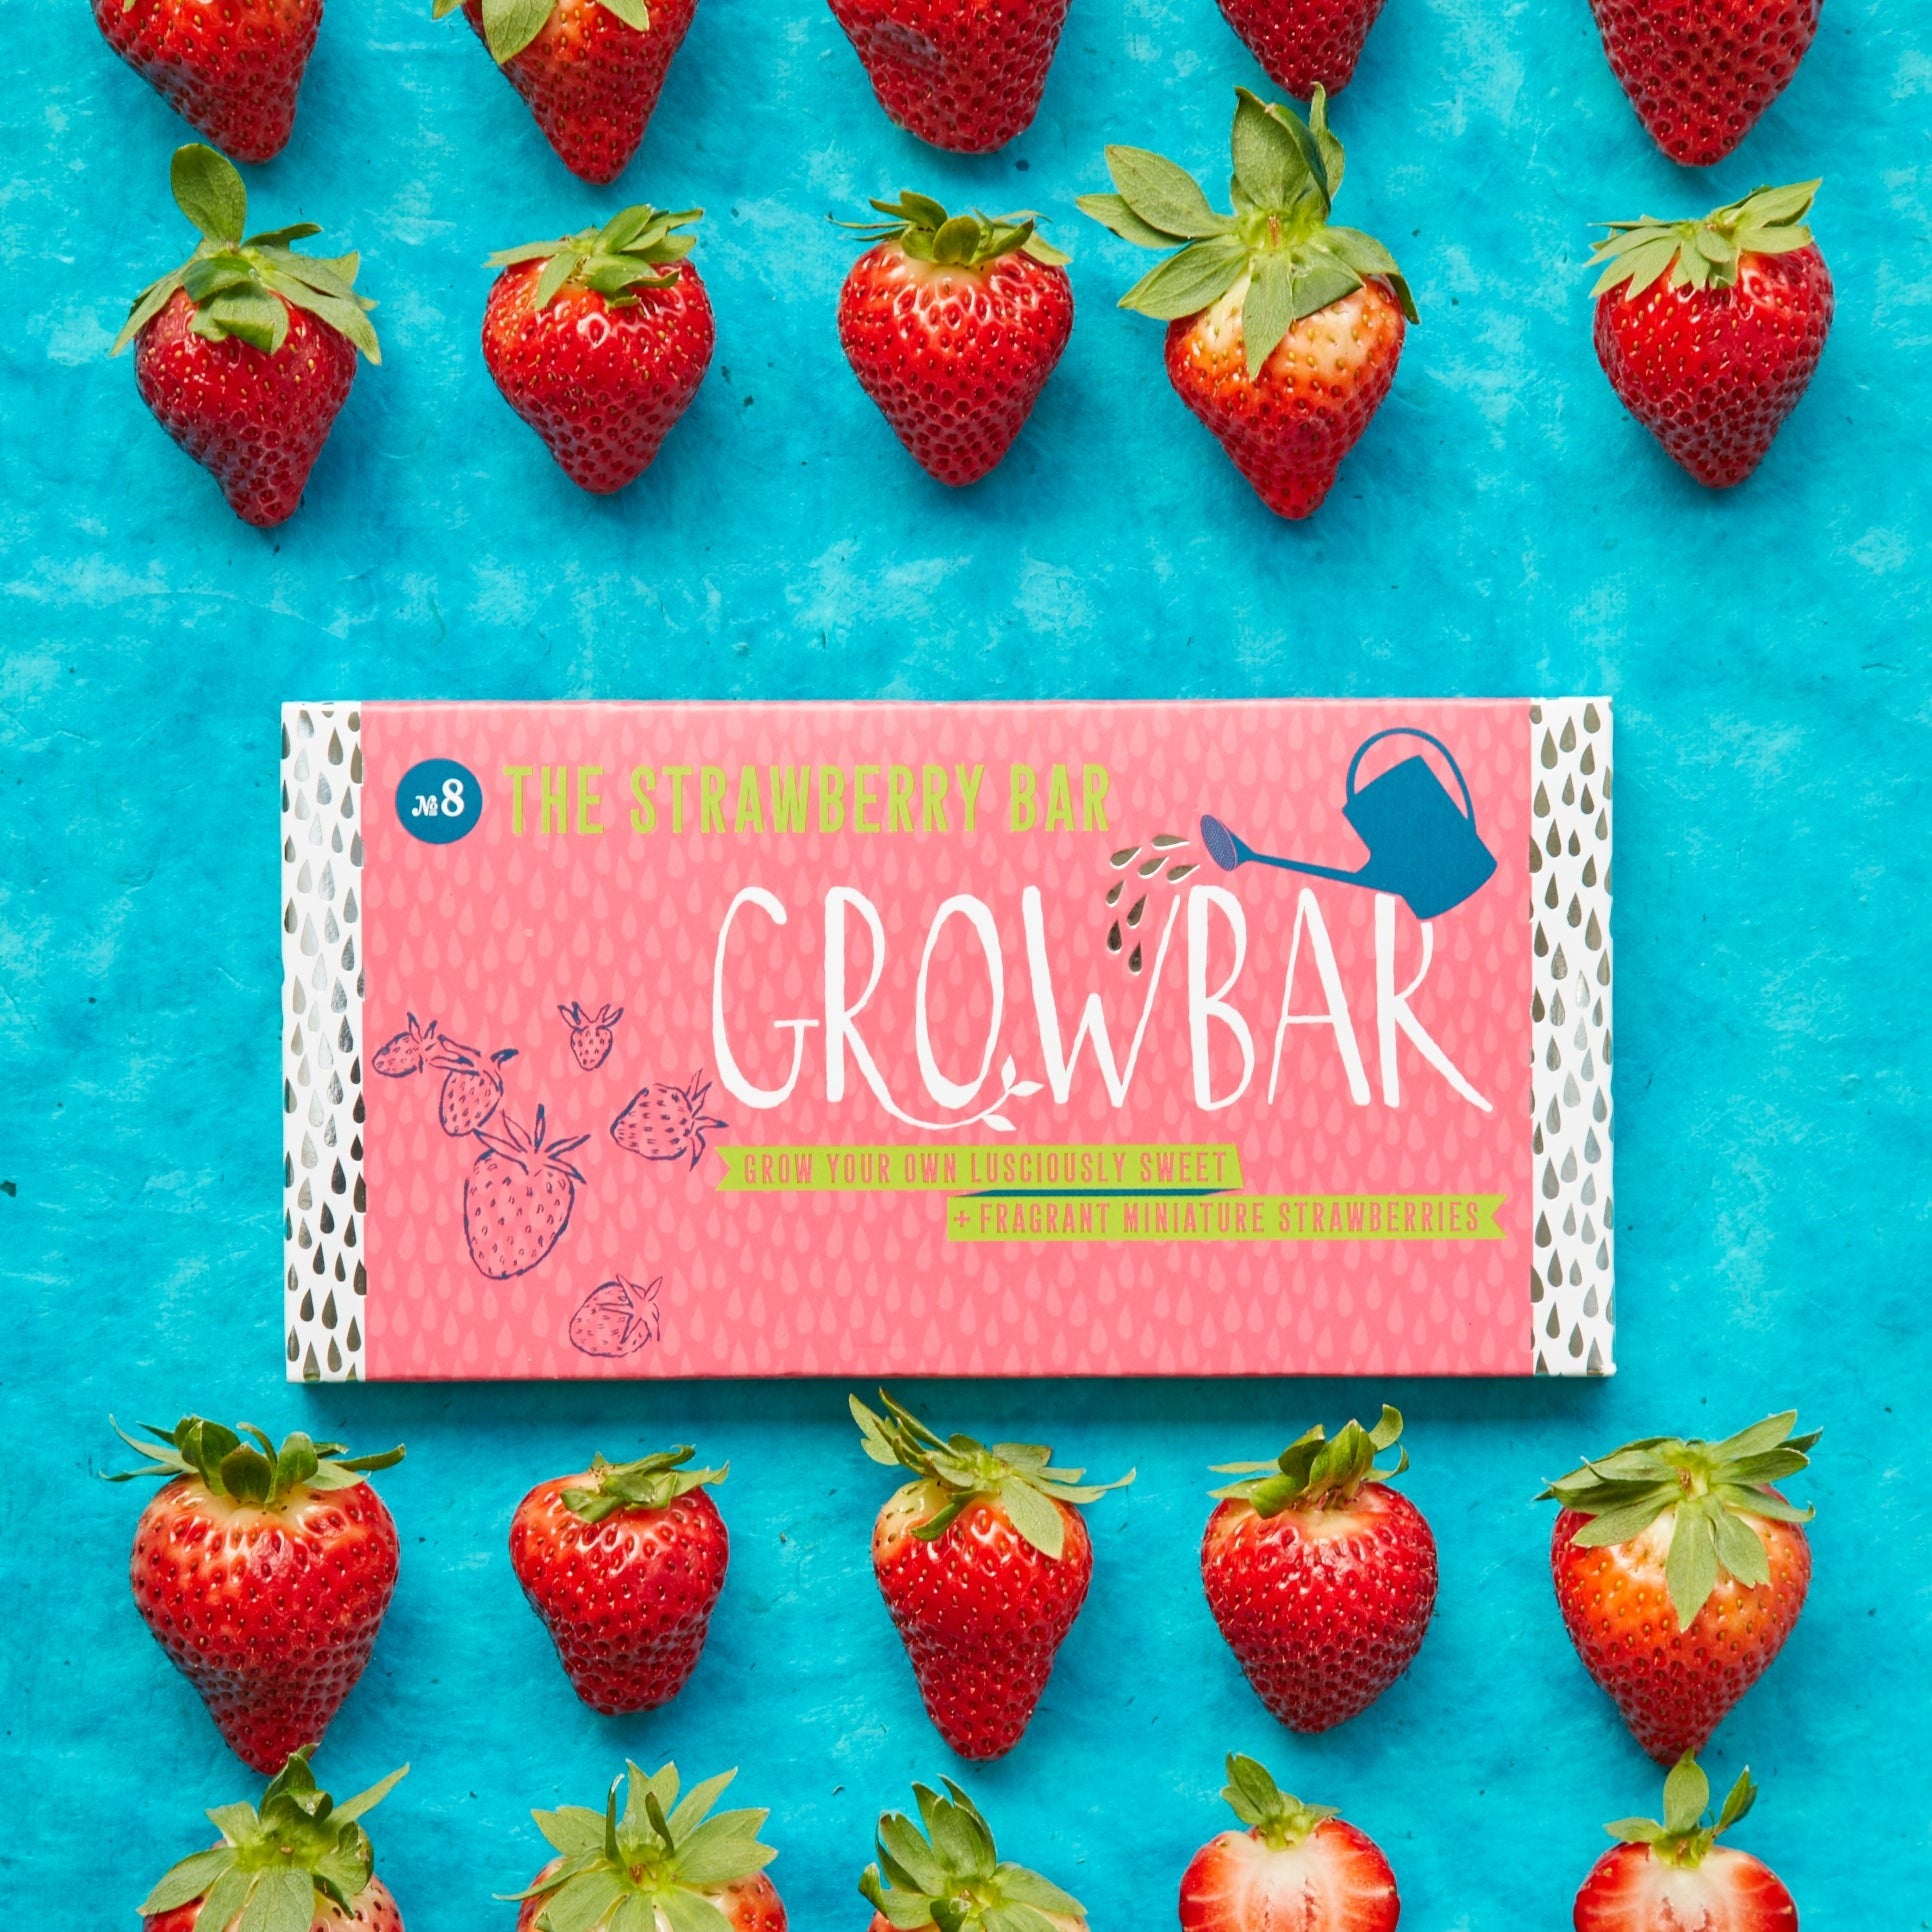 Growbar- The Strawberry Bar